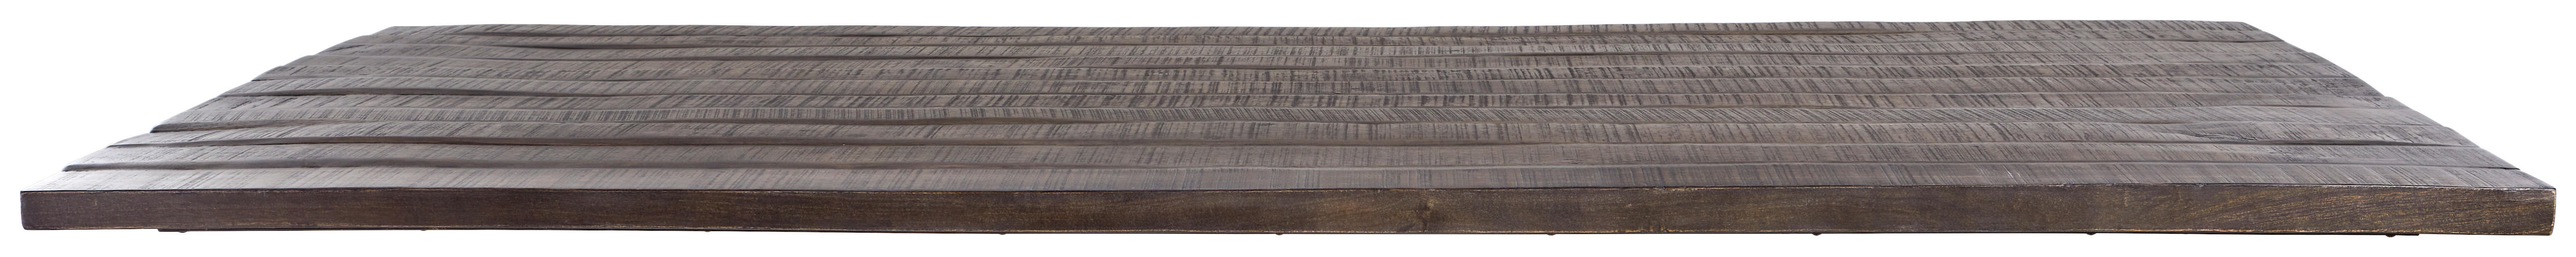 TISCHPLATTE 200/100/3,8 cm Mangoholz vollmassiv Holz Graubraun  - Graubraun, Natur, Holz (200/100/3,8cm) - Valdera